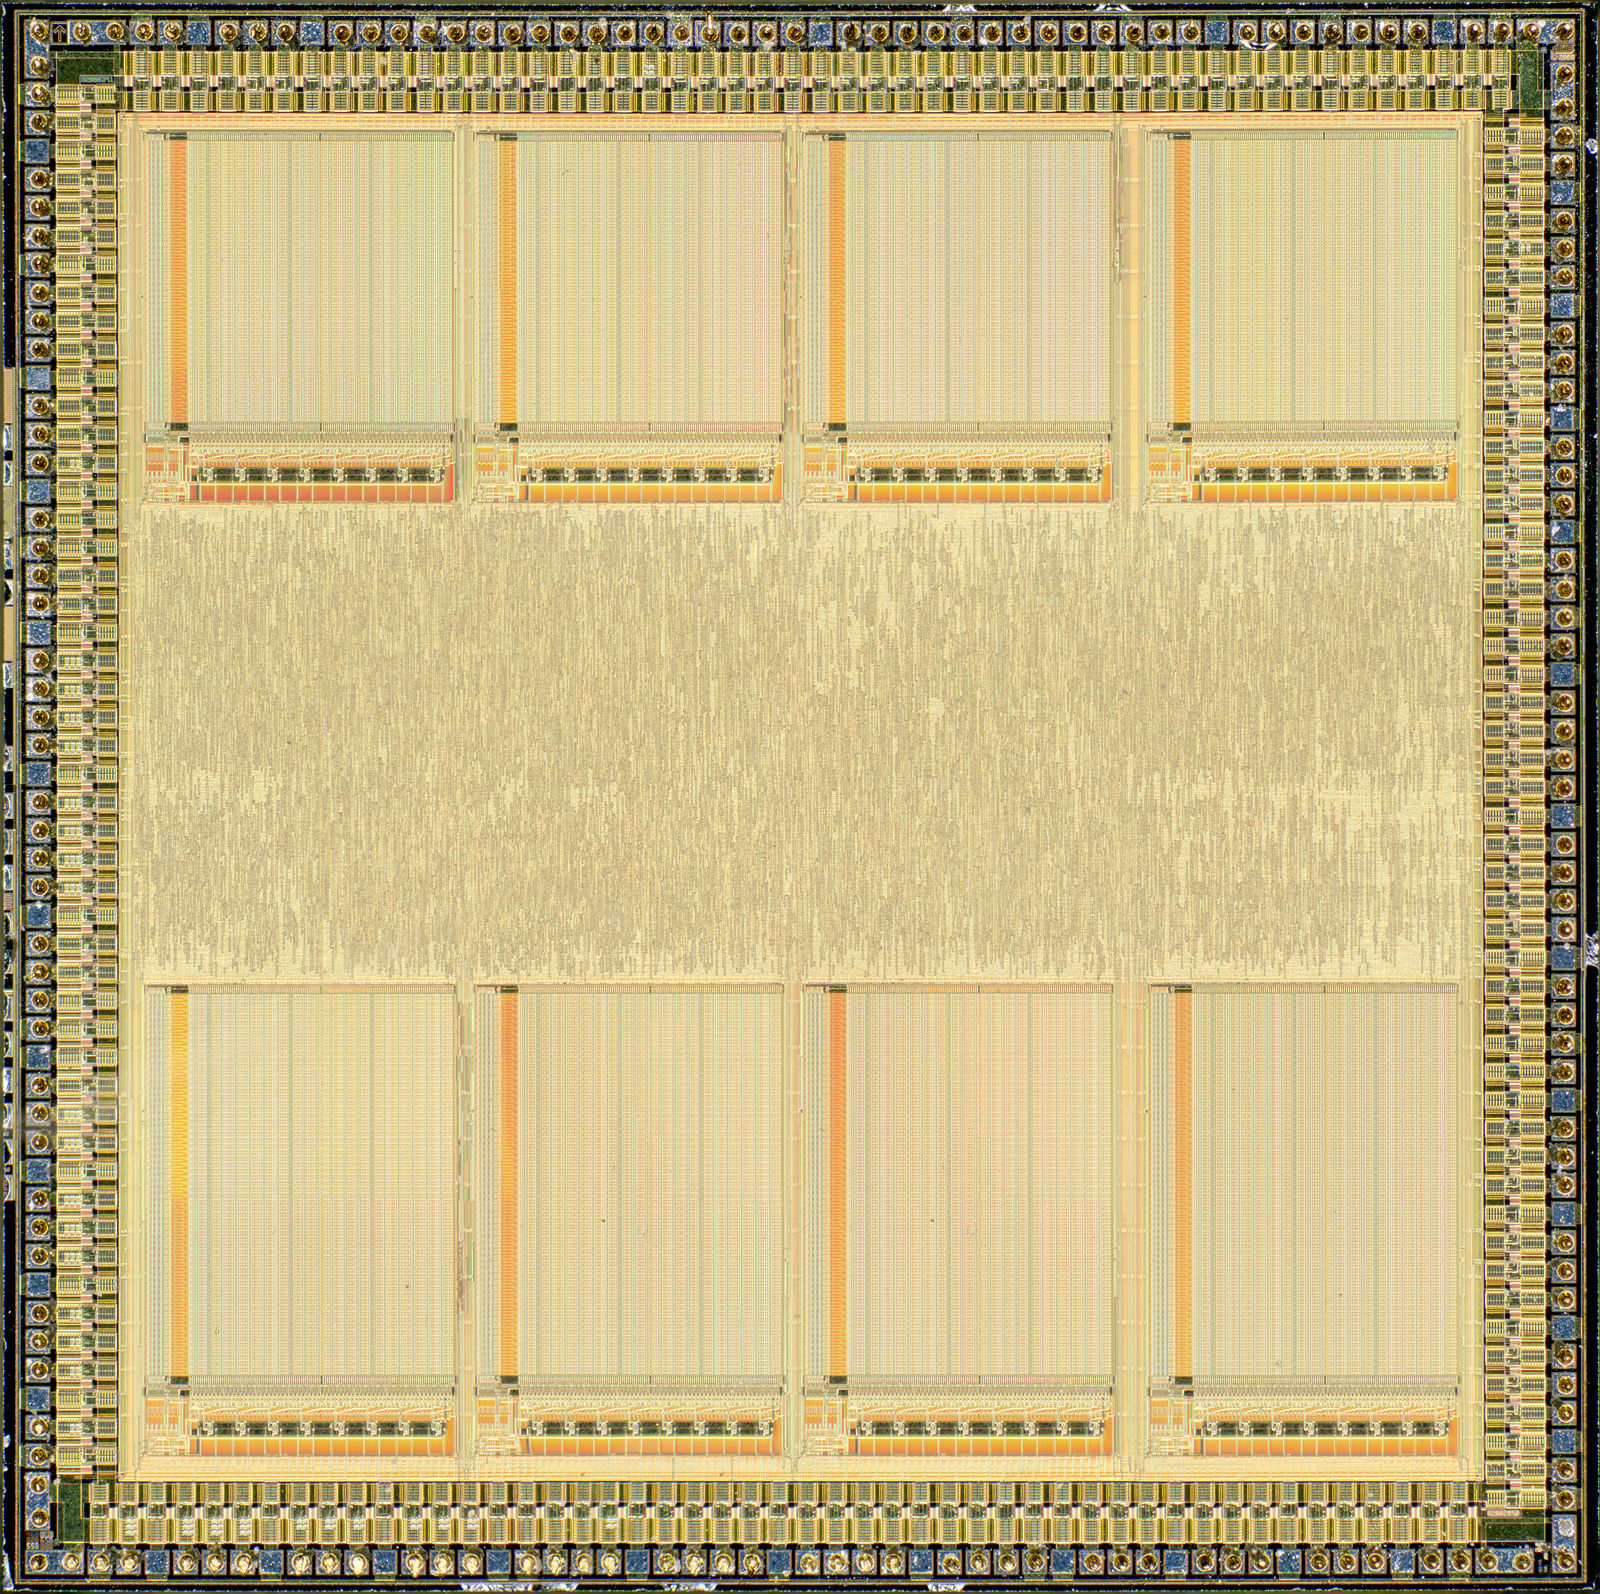 bercovici:equinox:290498-superserial-processor-atmel:mz.jpg